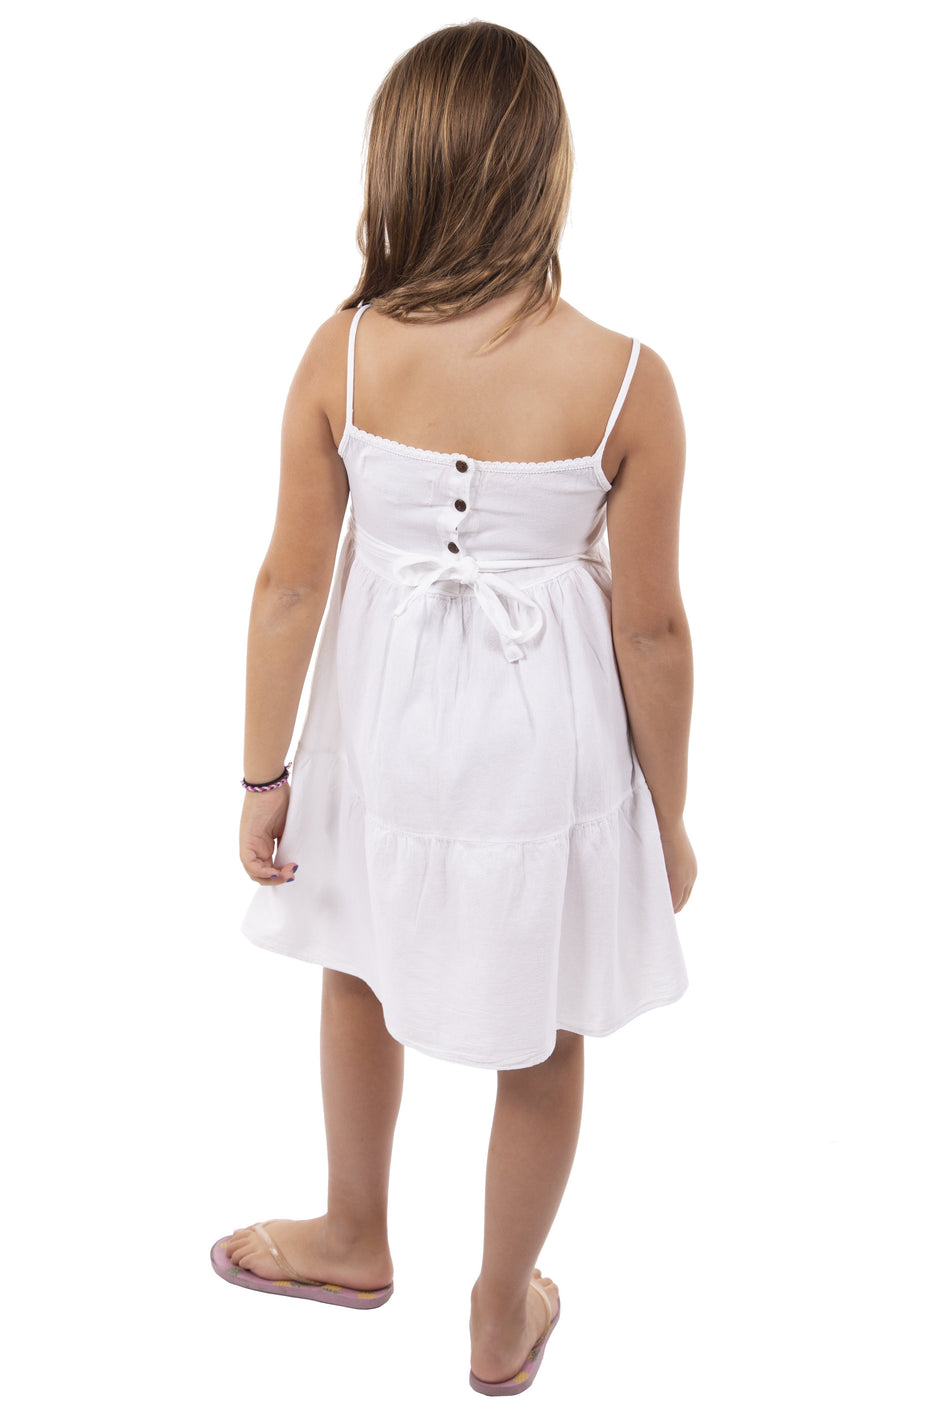 G1111 - White Cotton Dress